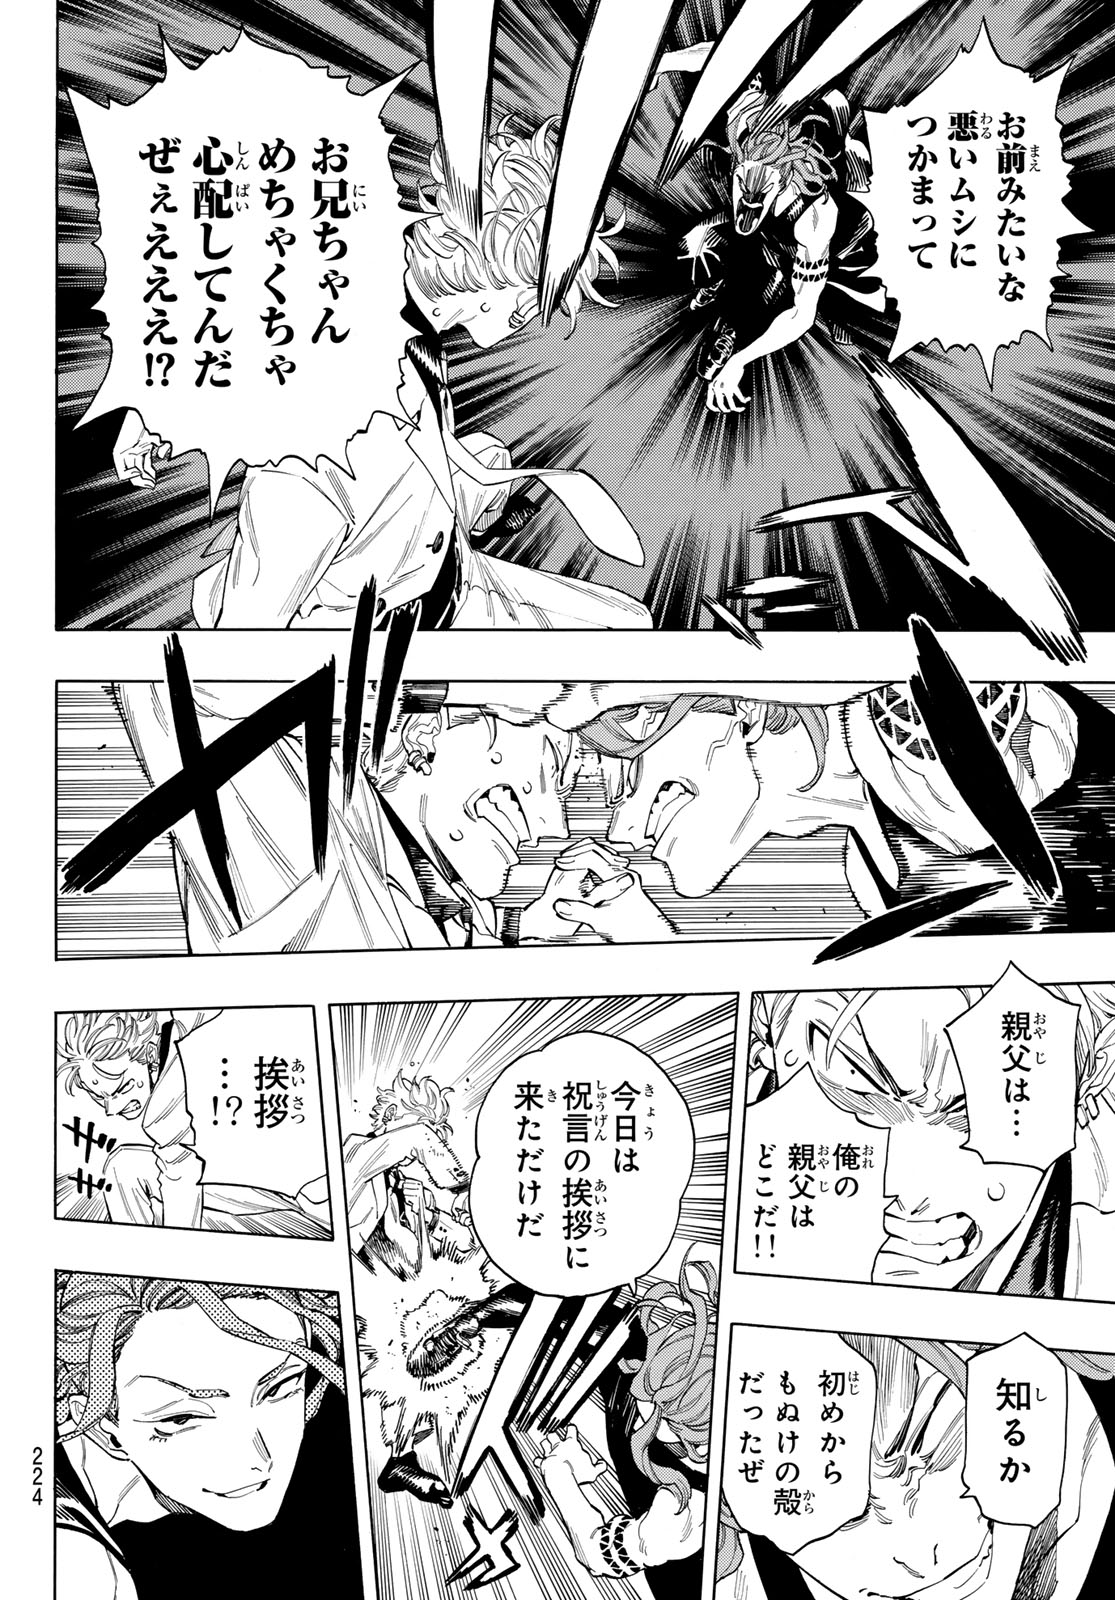 Akabane Honeko no Bodyguard - Chapter 66 - Page 2